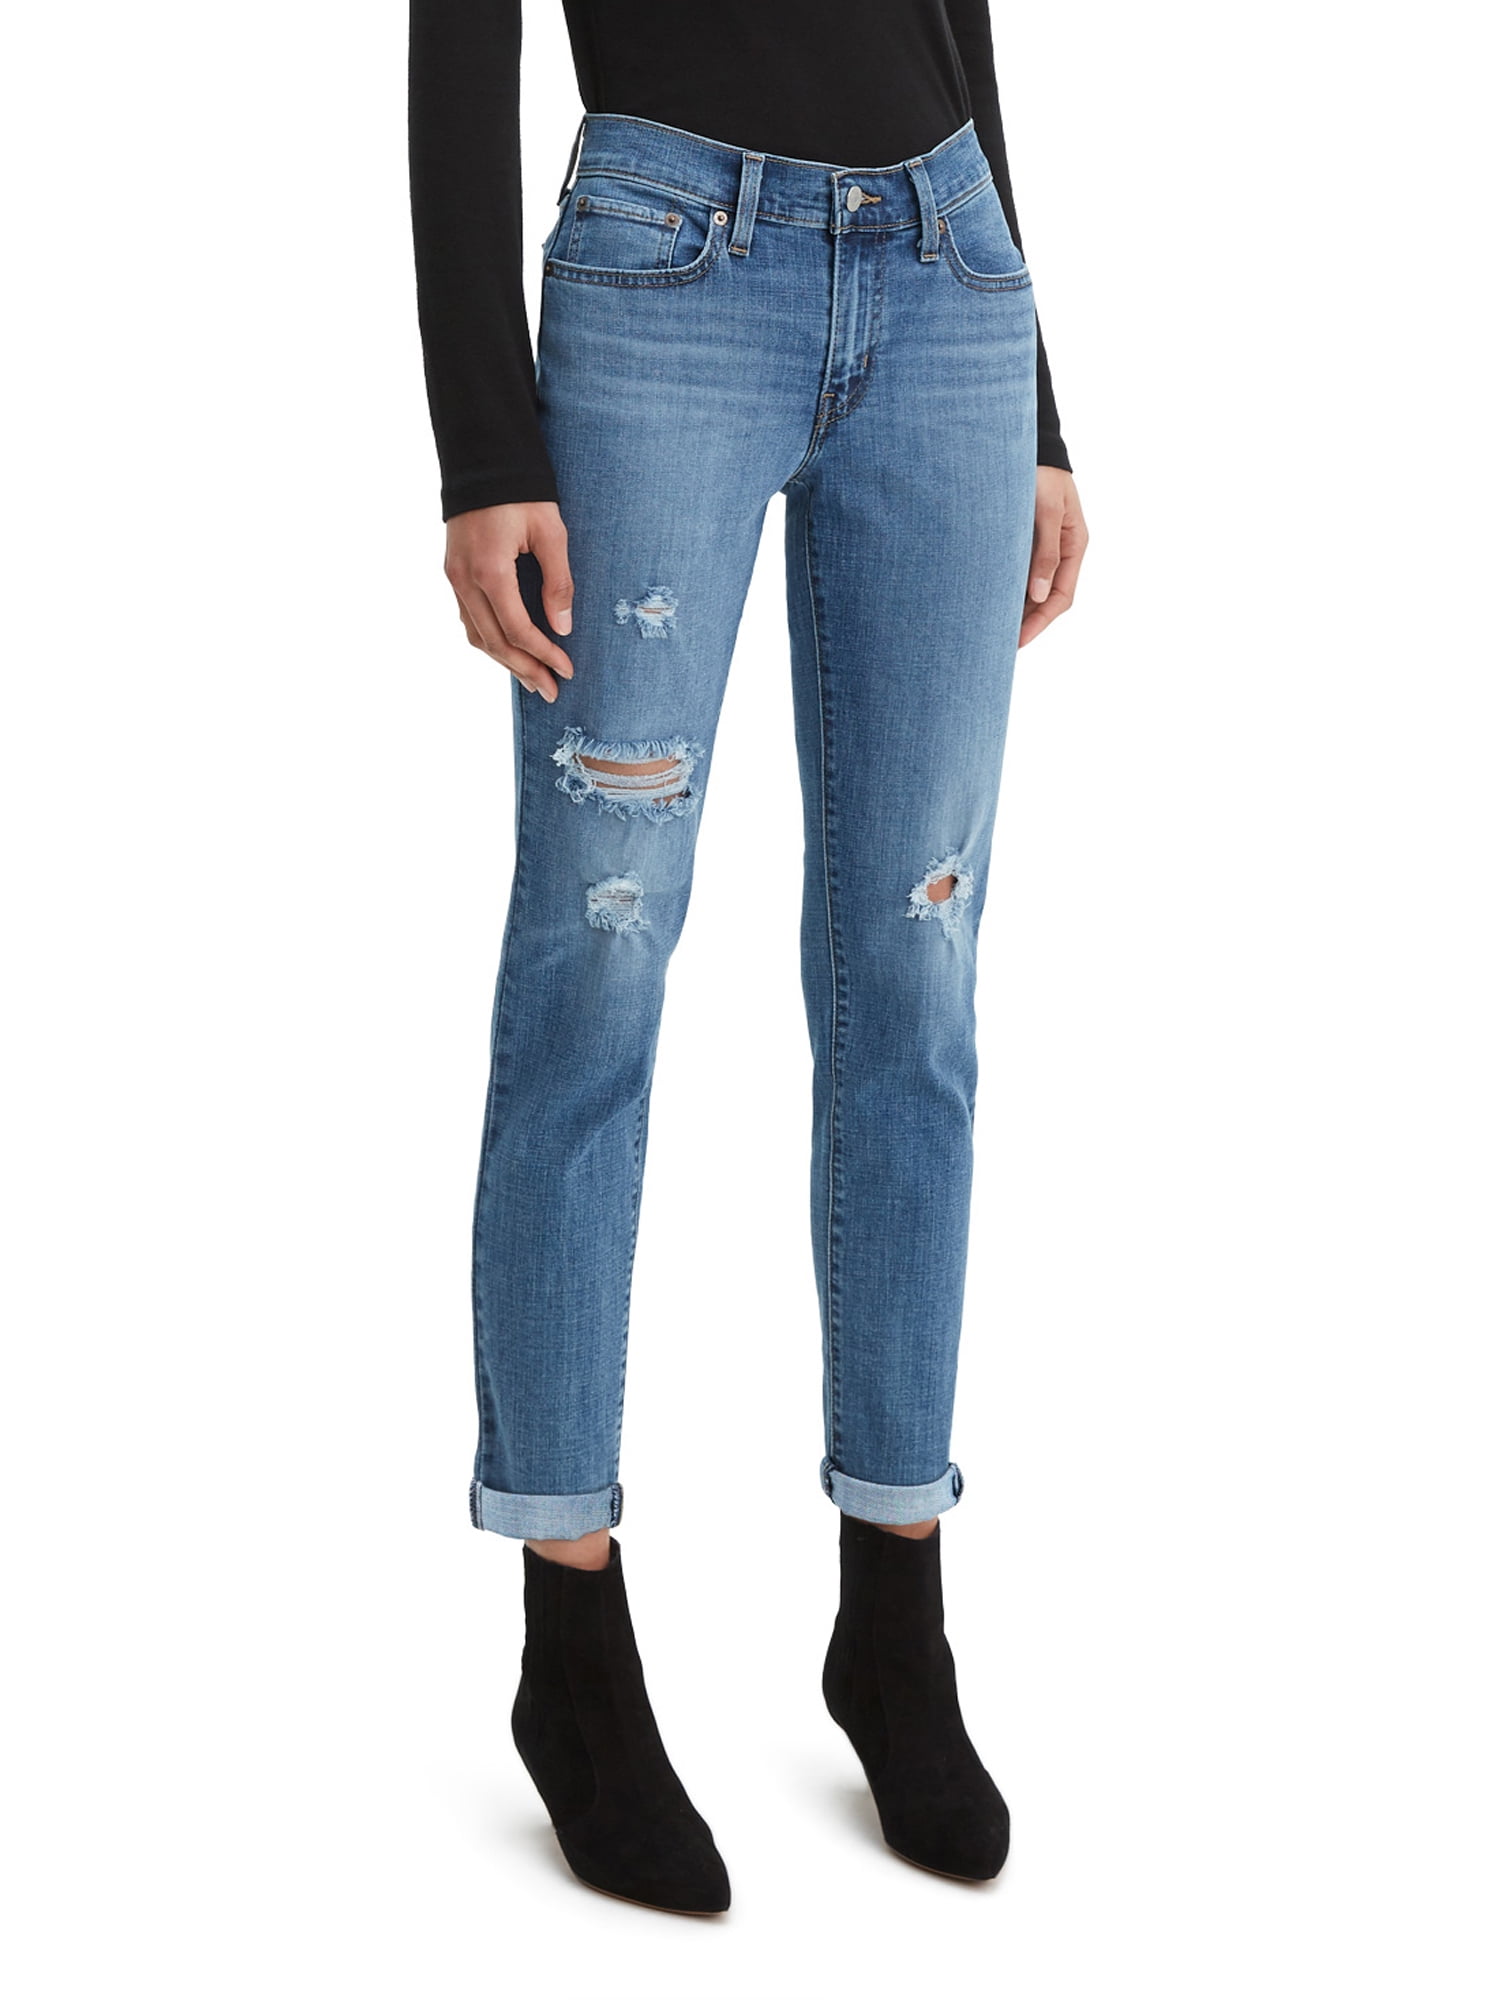 levis women jeans price